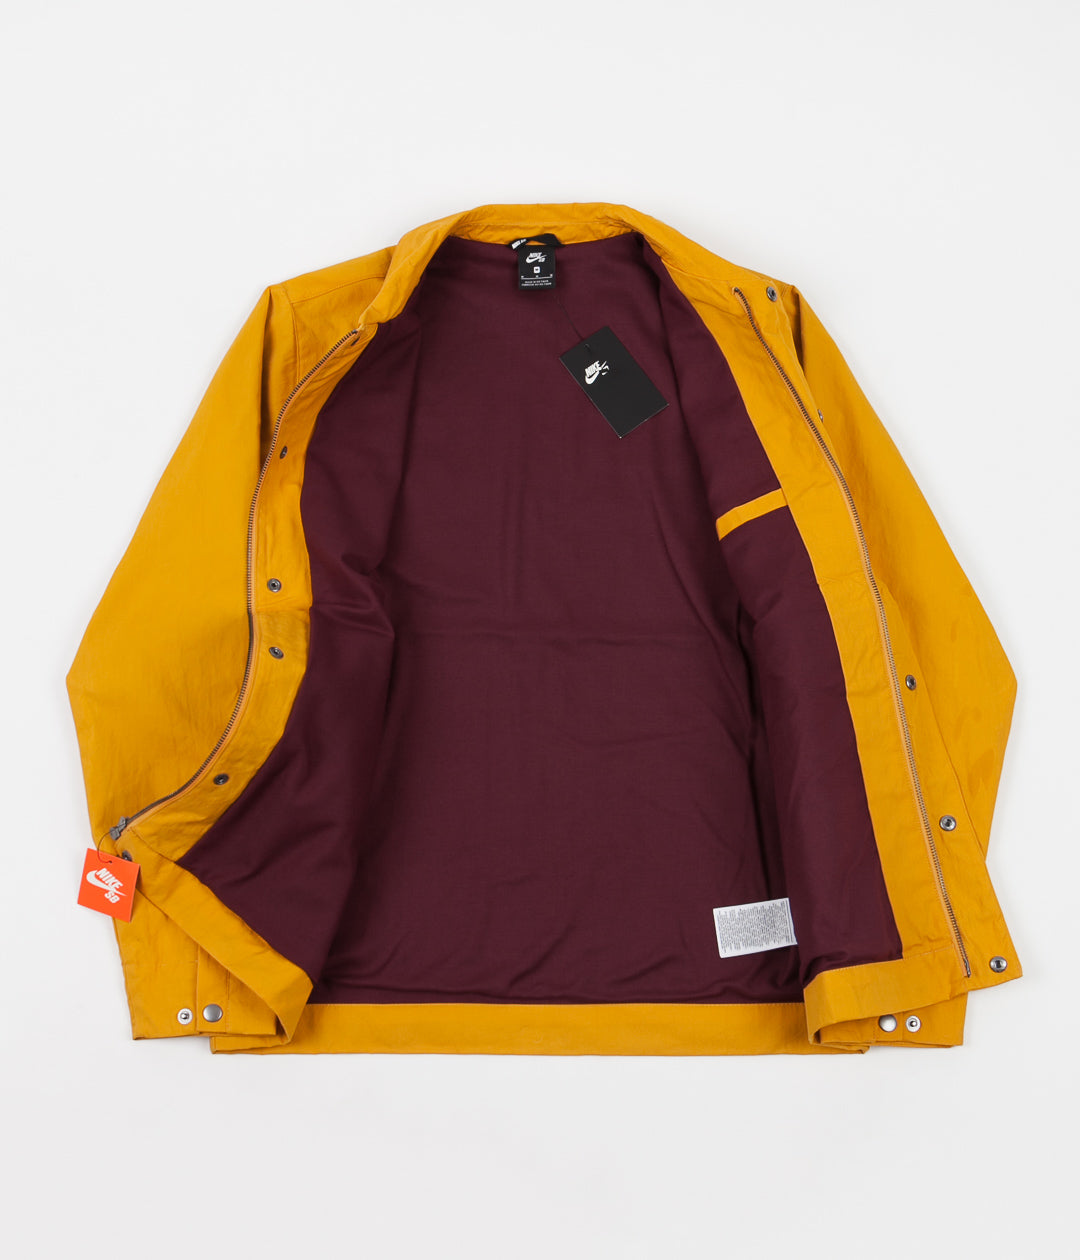 target burgundy jacket